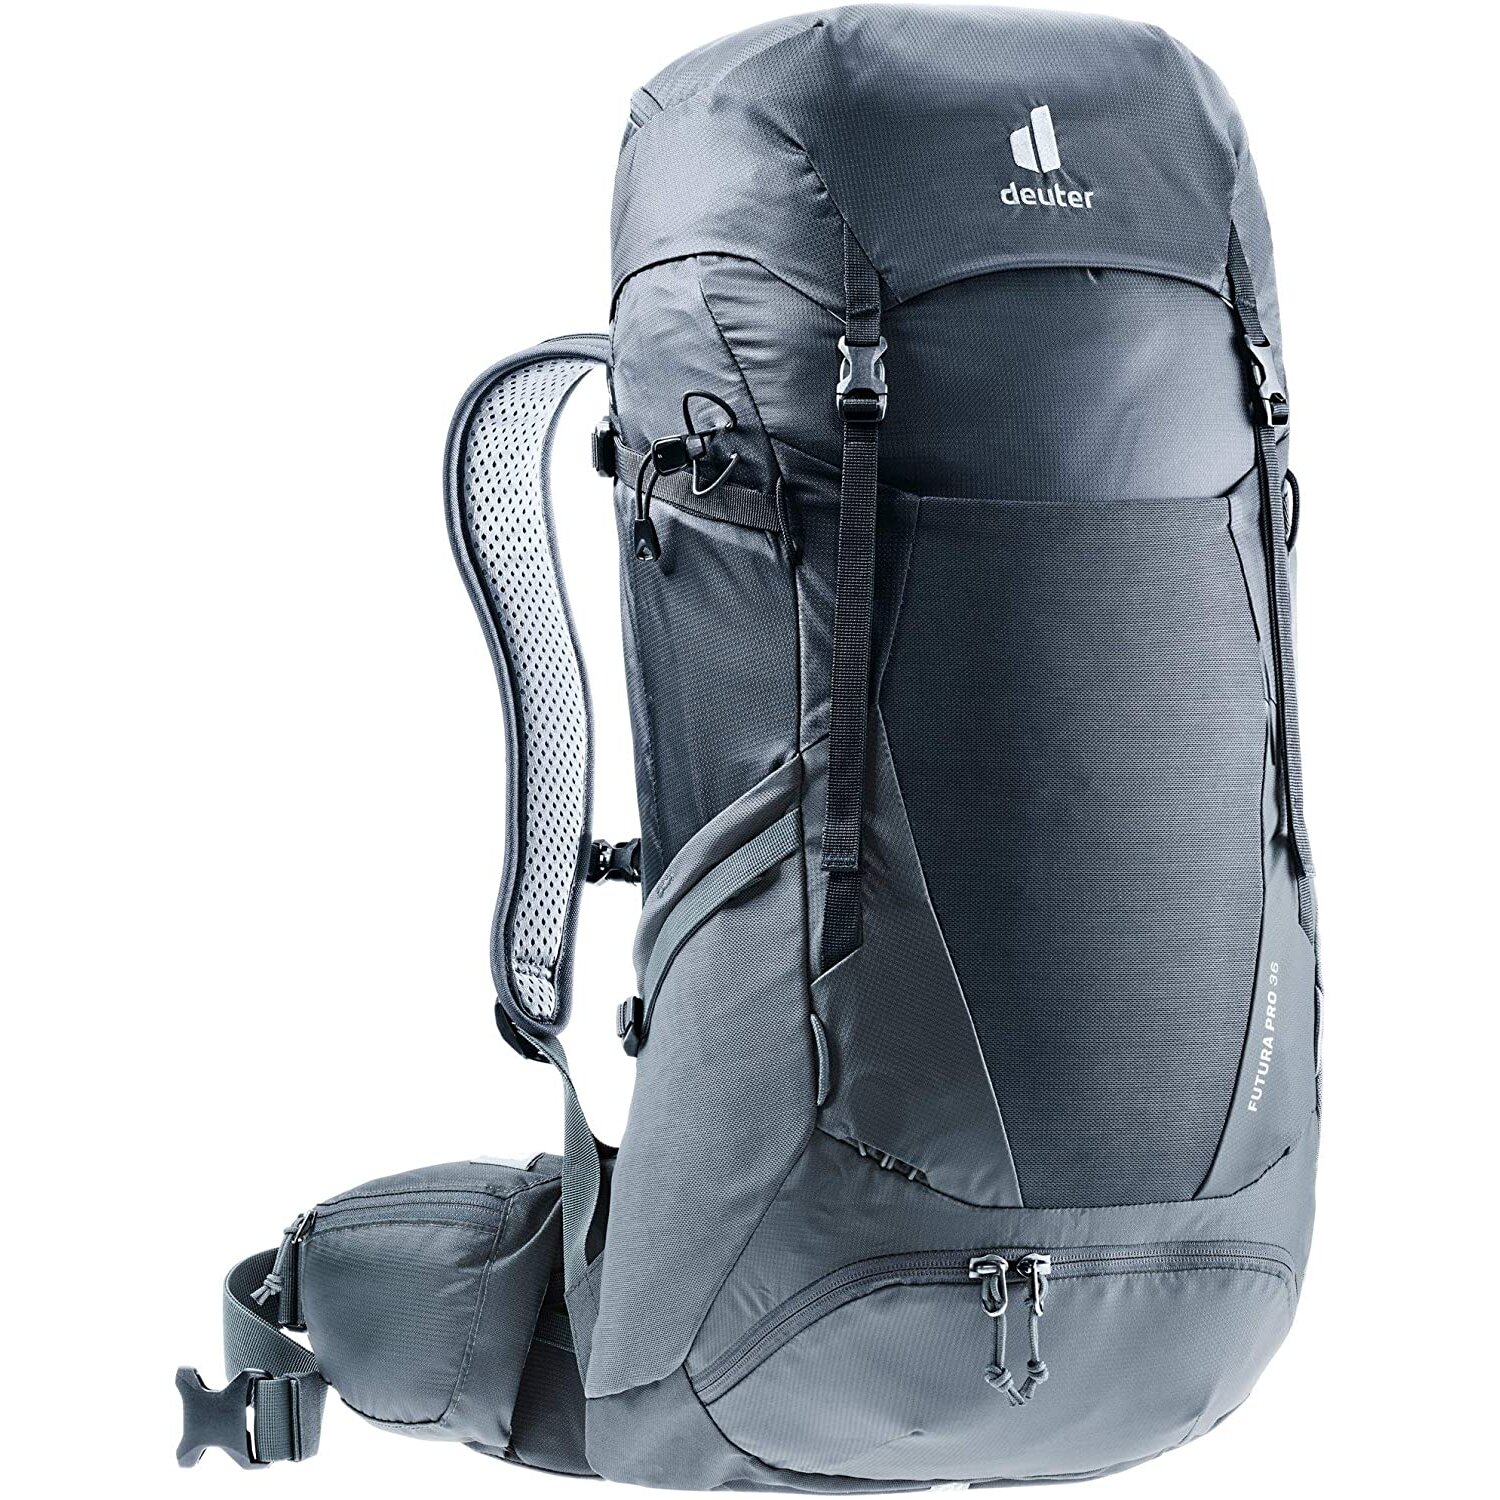 Deuter Unisex?�C Adult's Futura Pro 36 Hiking Backpack